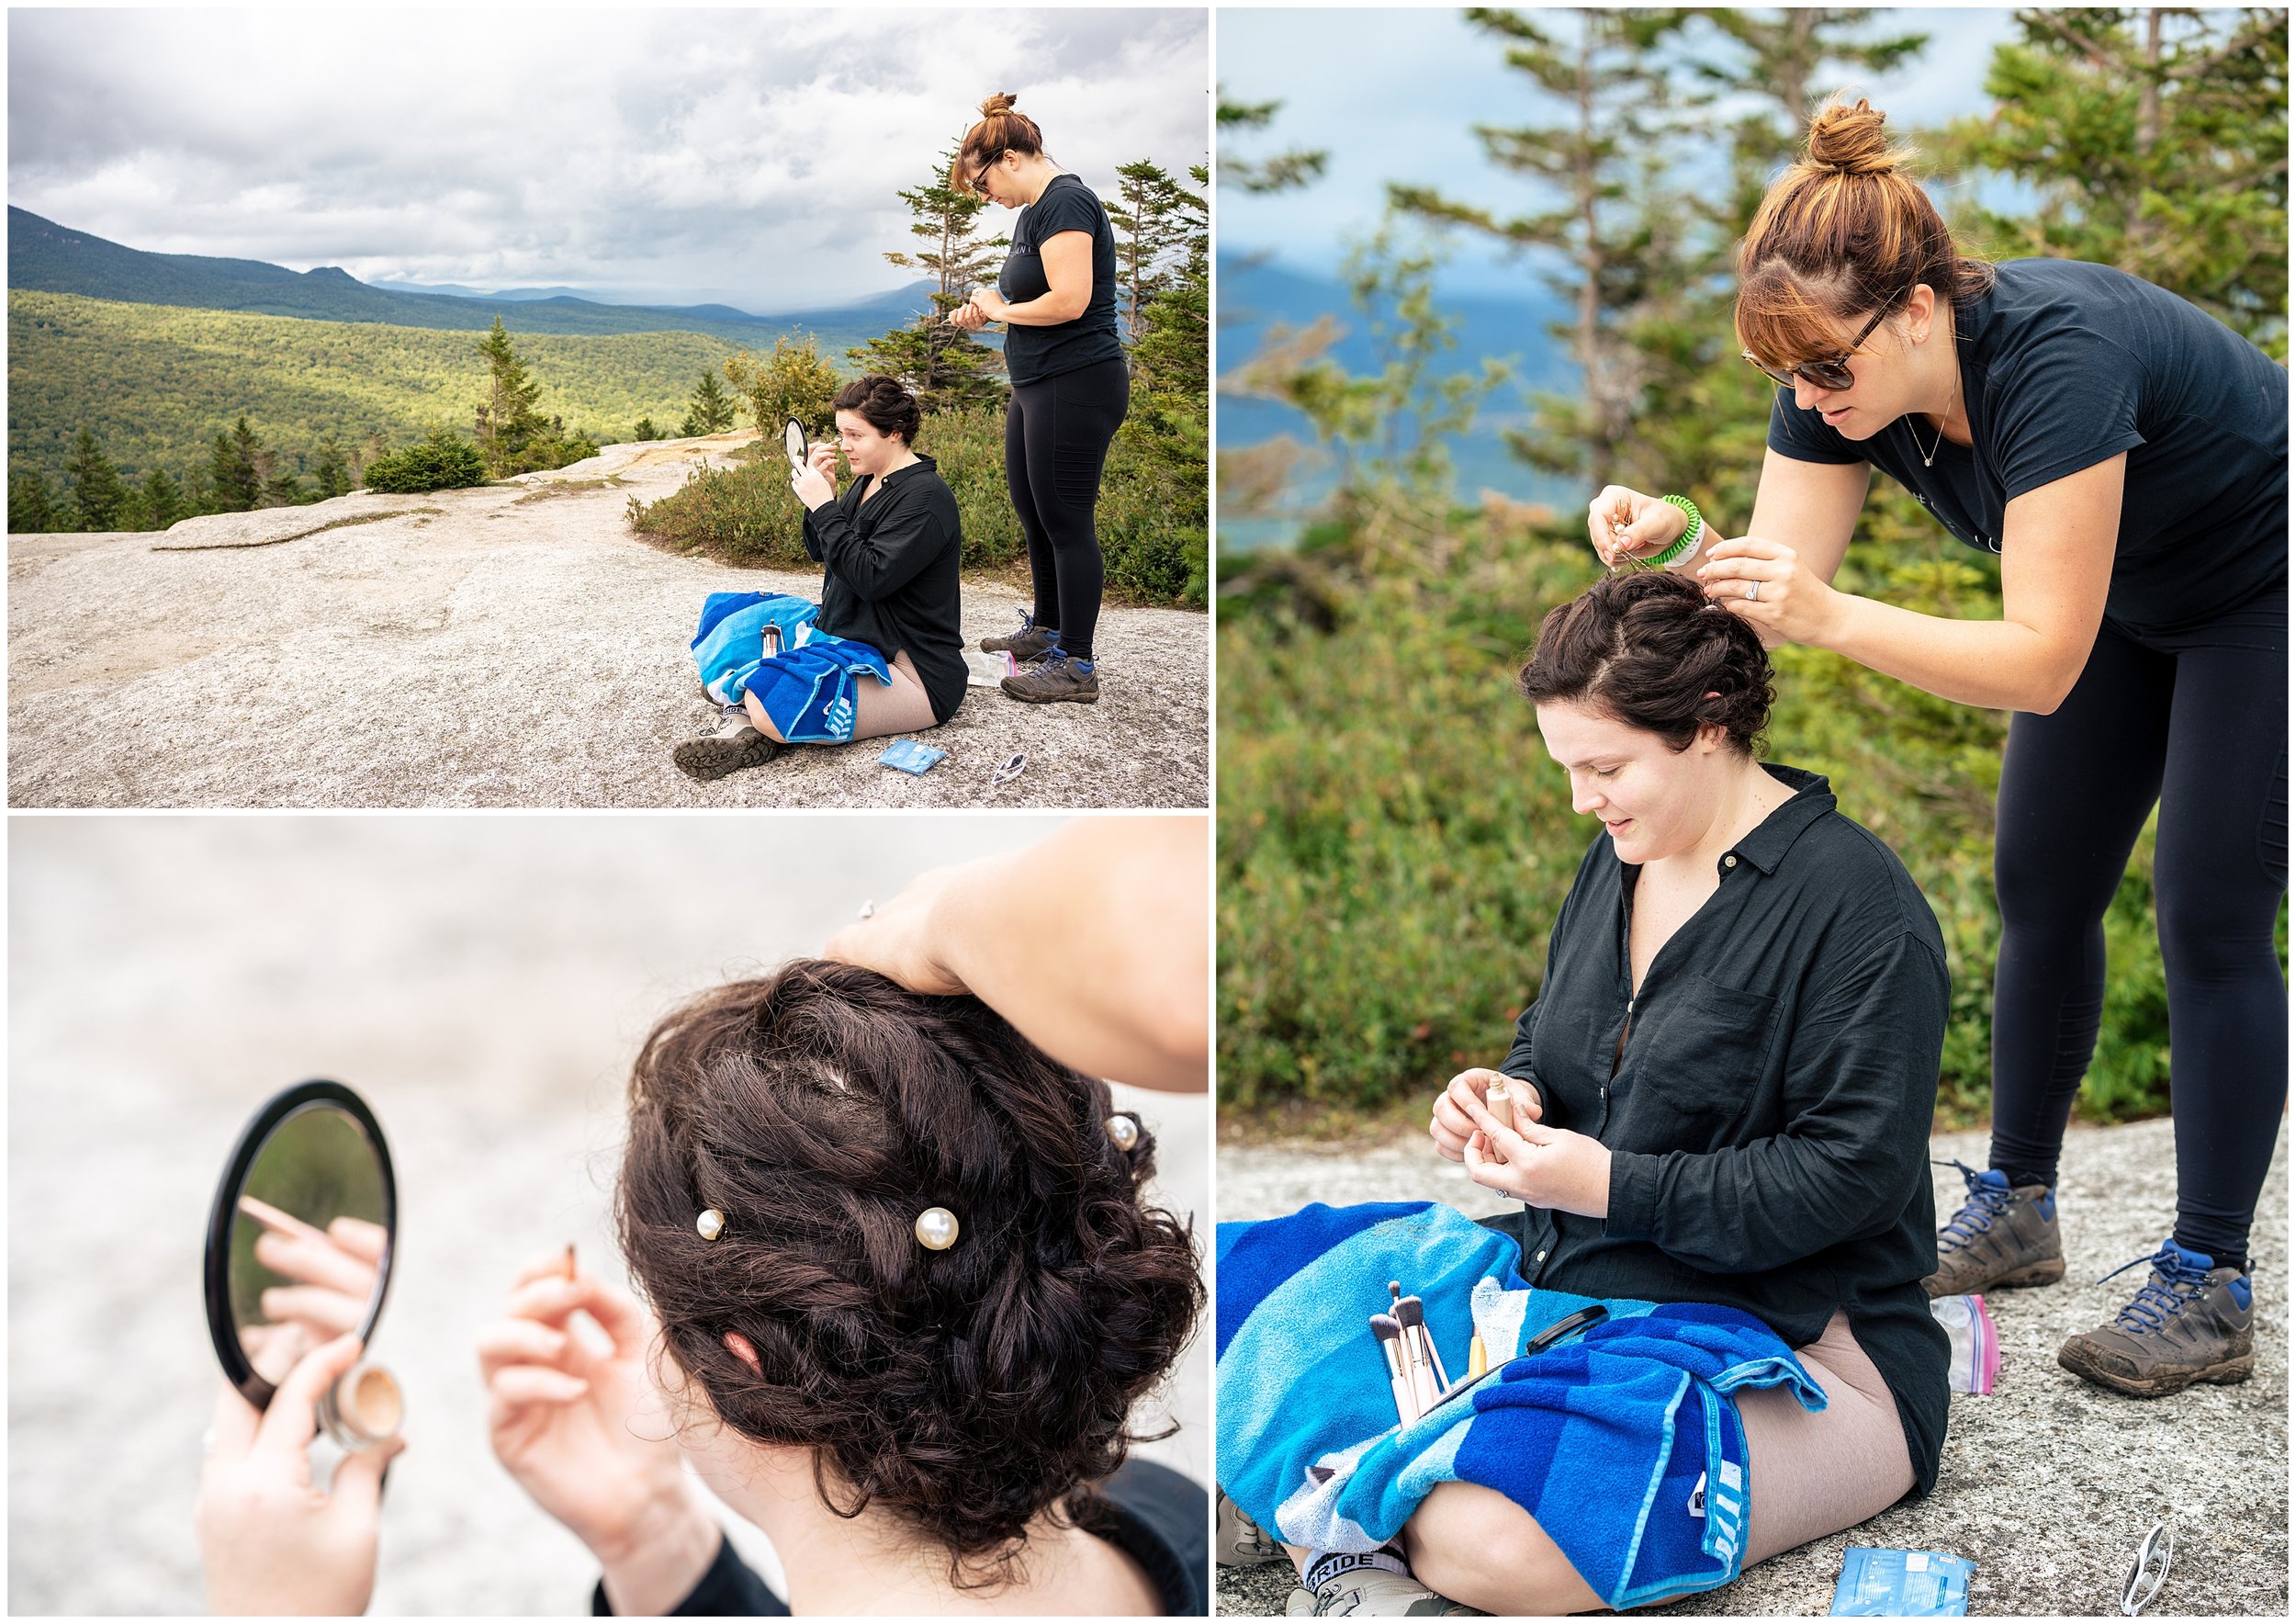 White Mountains Adventure Wedding Photographers, Hike Wedding Photographers, Two Adventurous Souls- 081723_0007.jpg